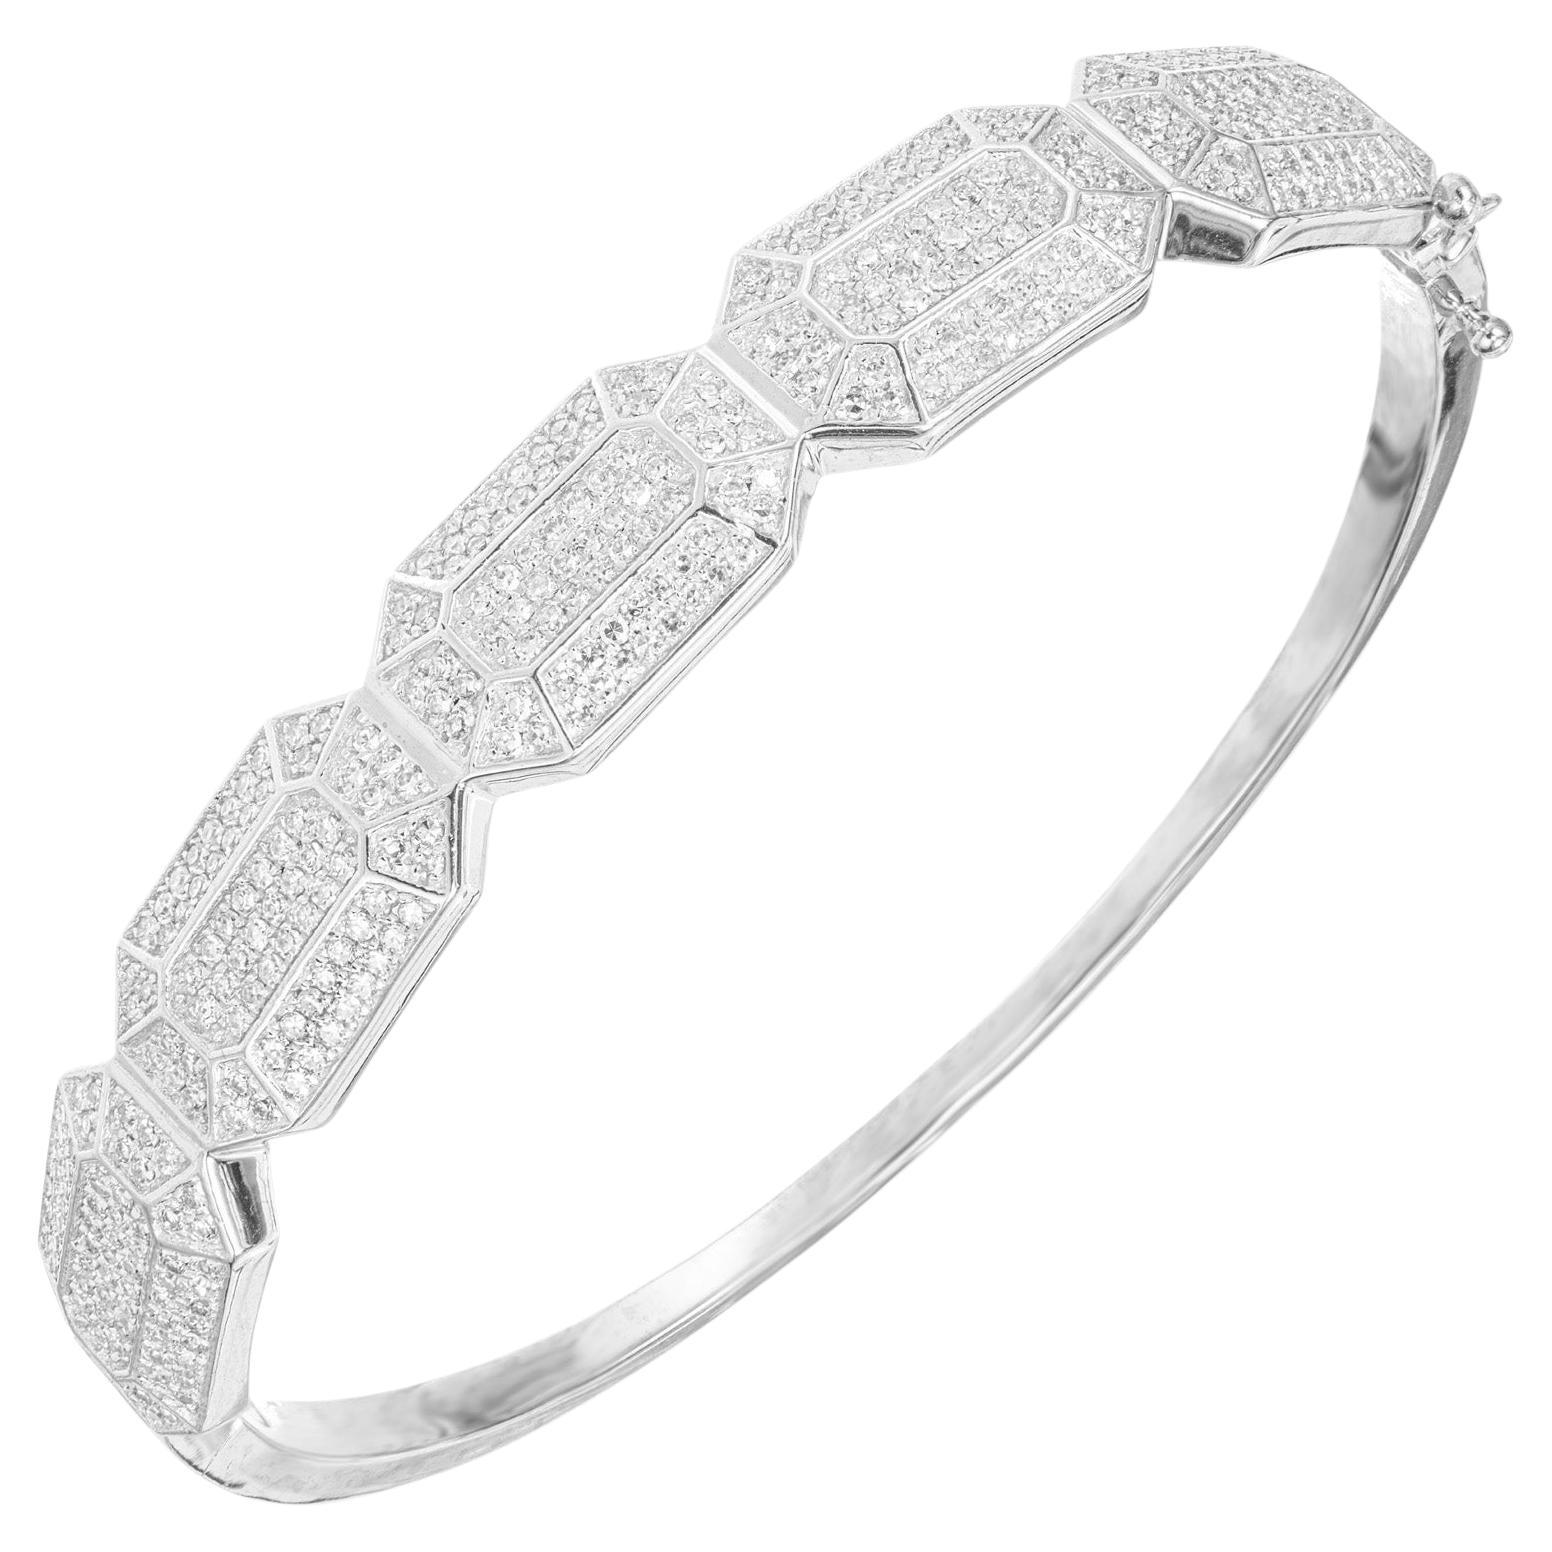 1.80 Carat Single Cut Diamond White Gold Bangle Bracelet